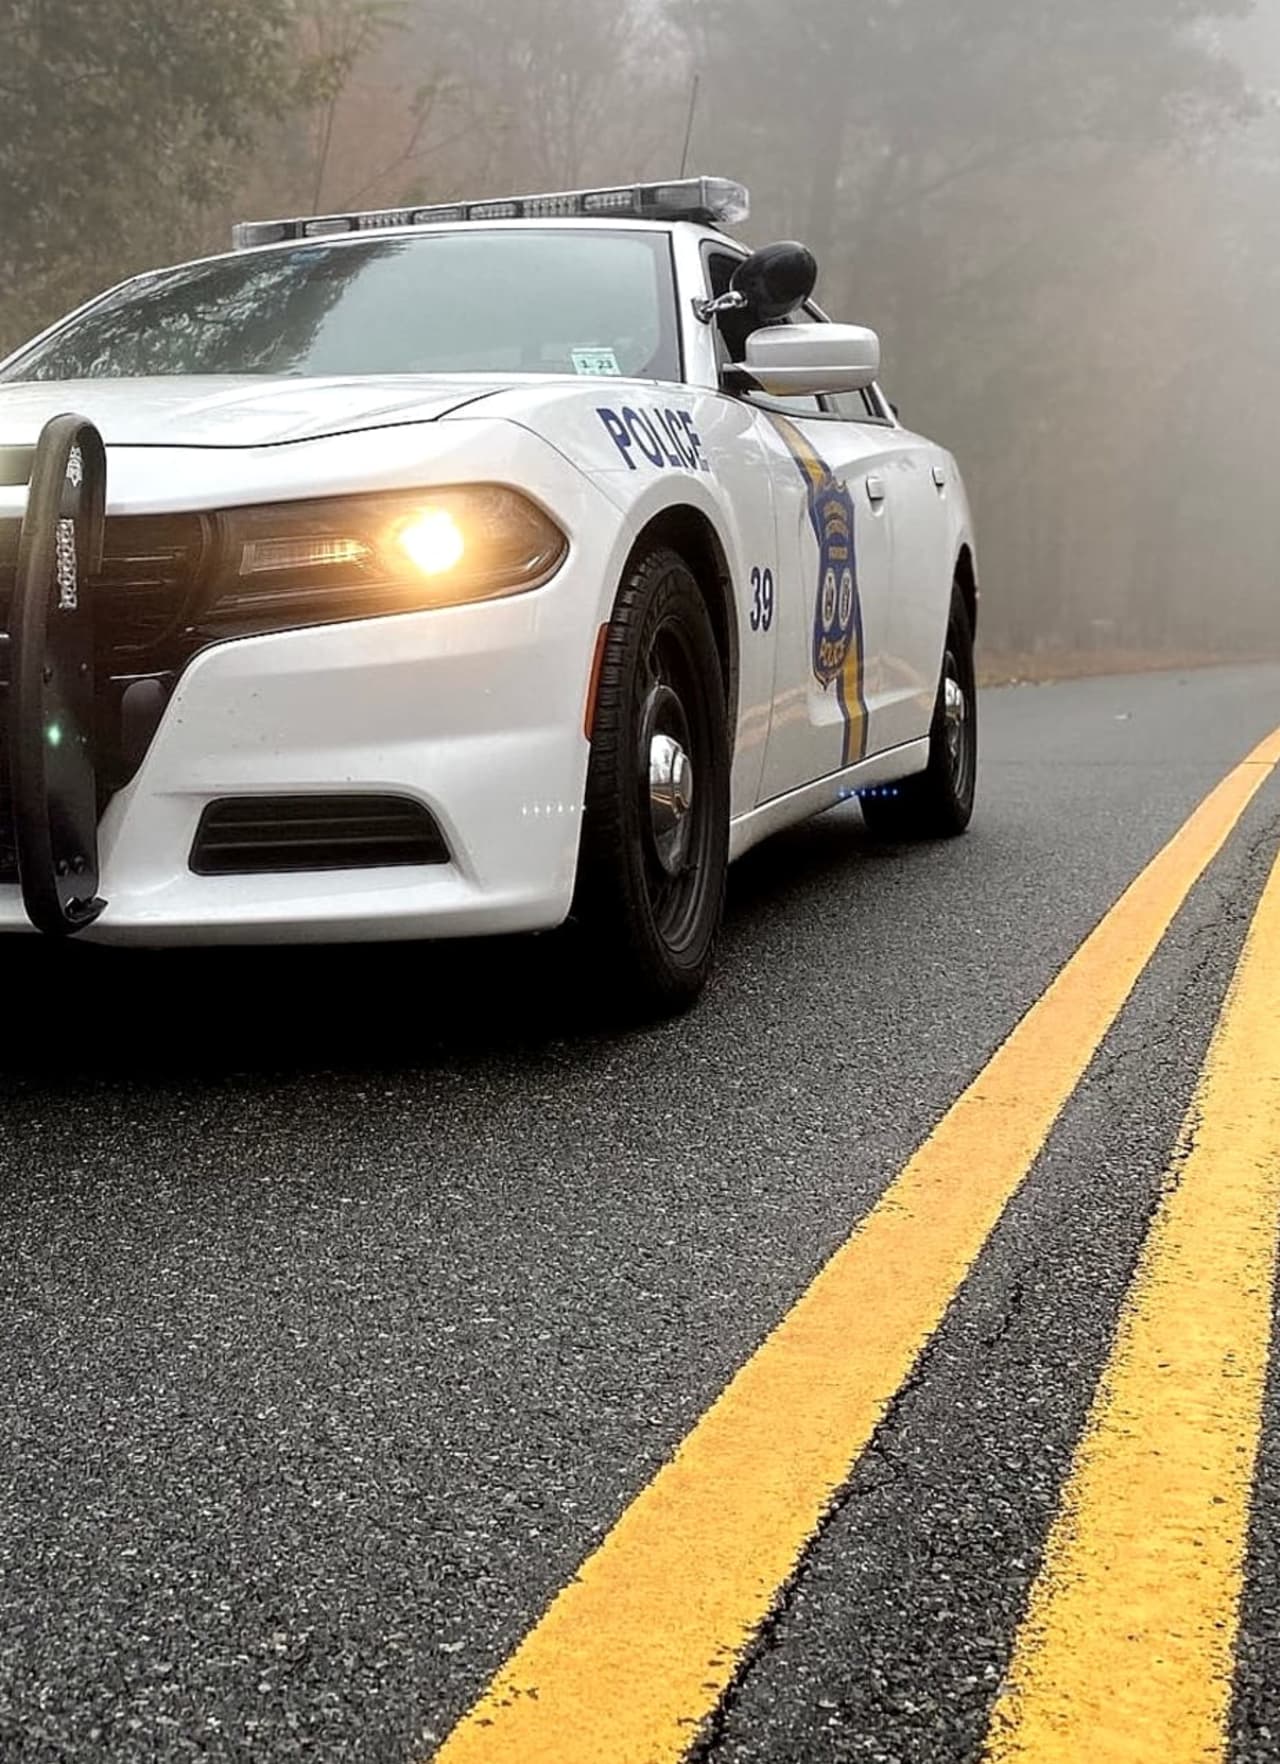 Palisades Interstate Parkway police